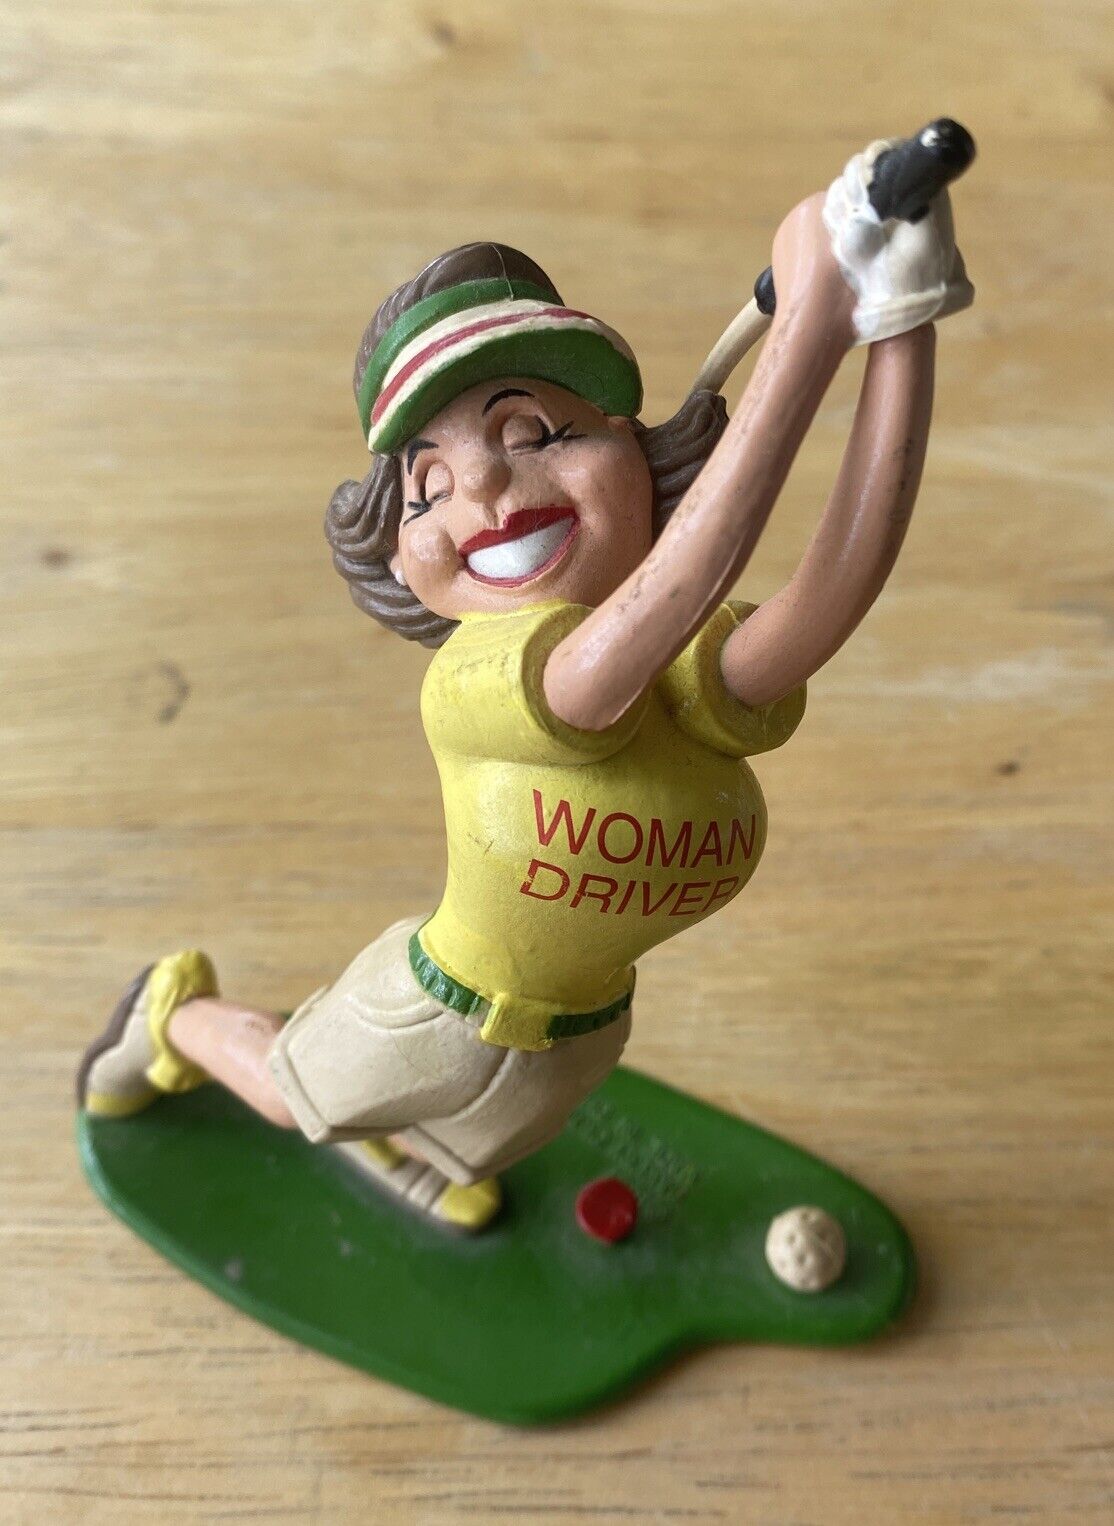 1997 Bakery Crafts Woman Driver Golfer Golf Club PVC Figurine Figure Vintage